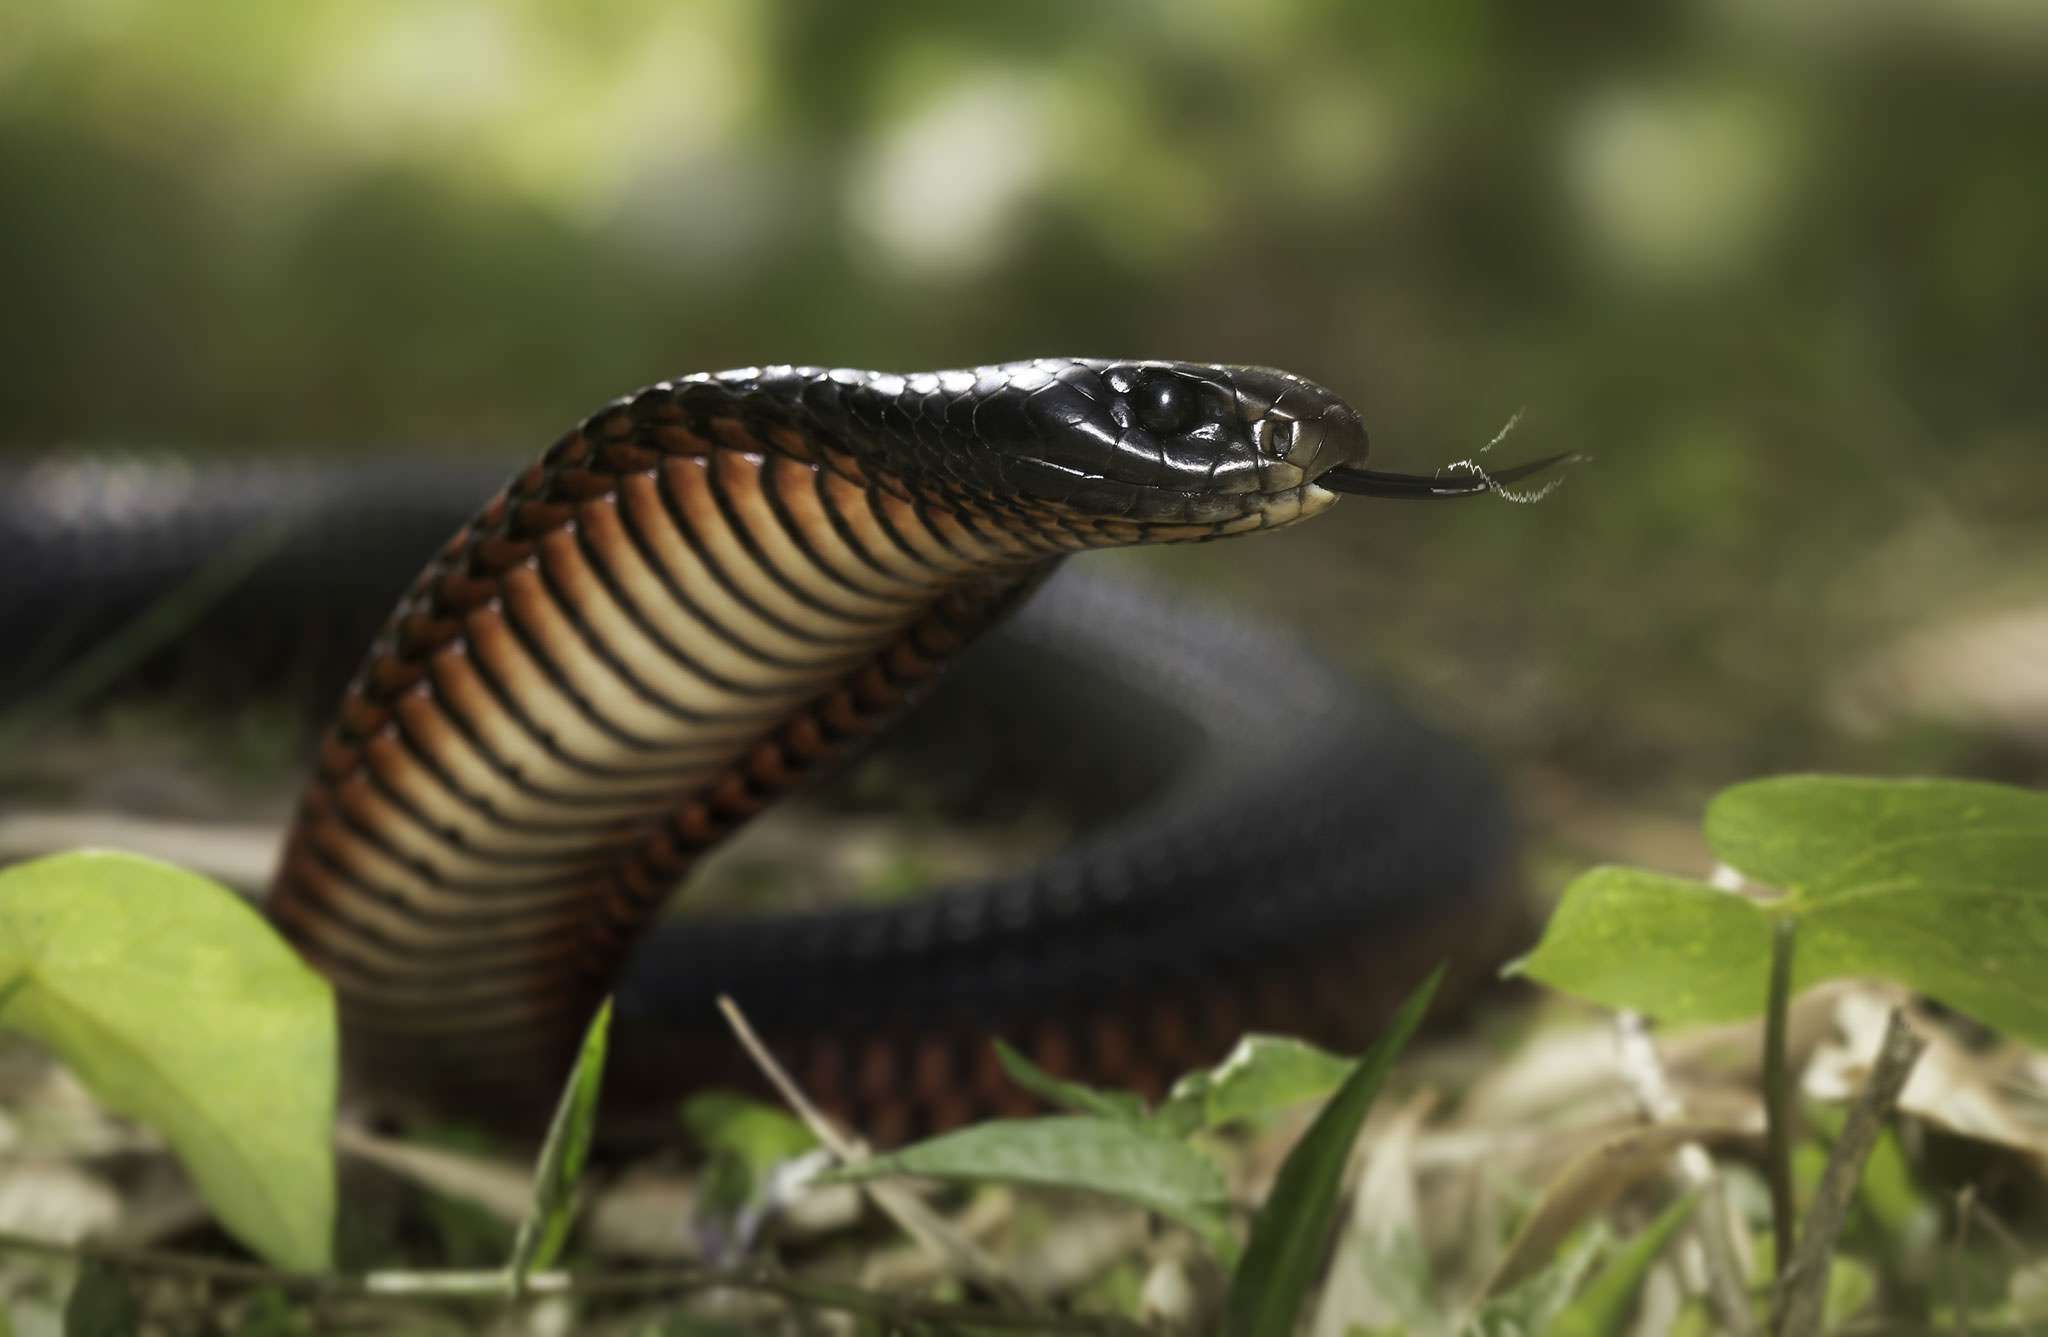 Red Bellied Black Snake Habitat, Diet & Reproduction